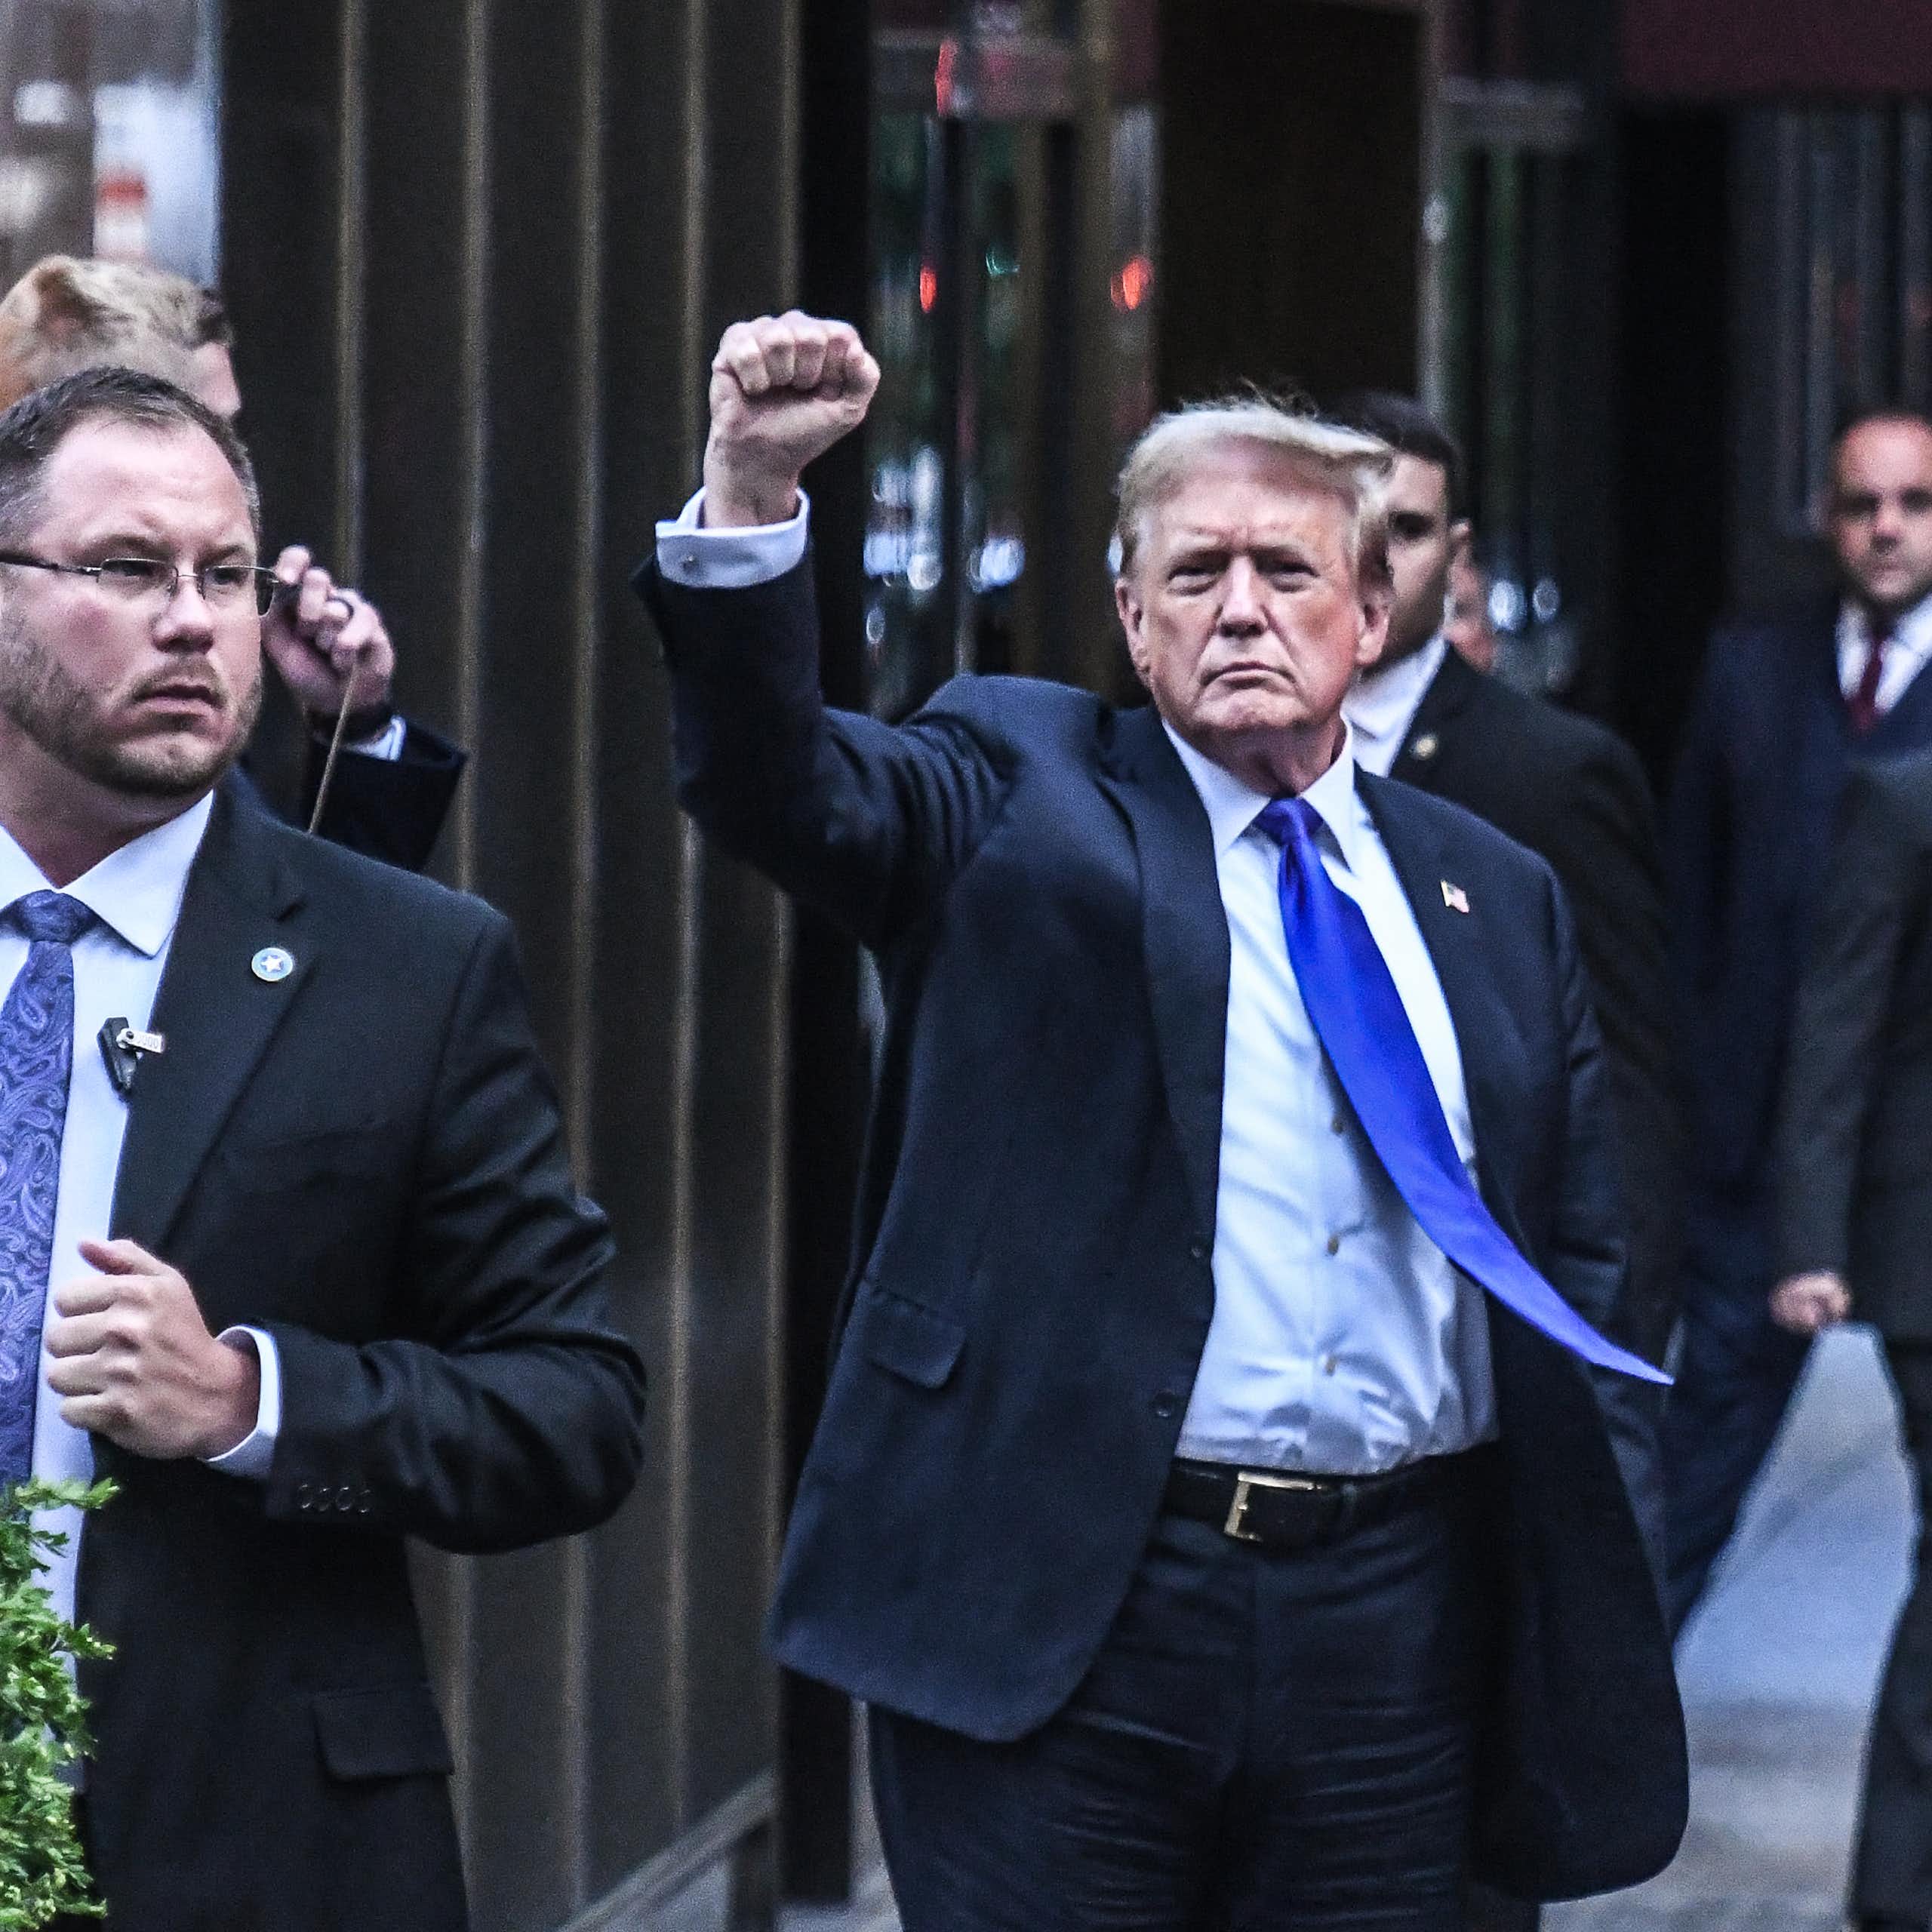 A man in a blue blazer and blue tie raises his fist as he walks on a sidewalk.